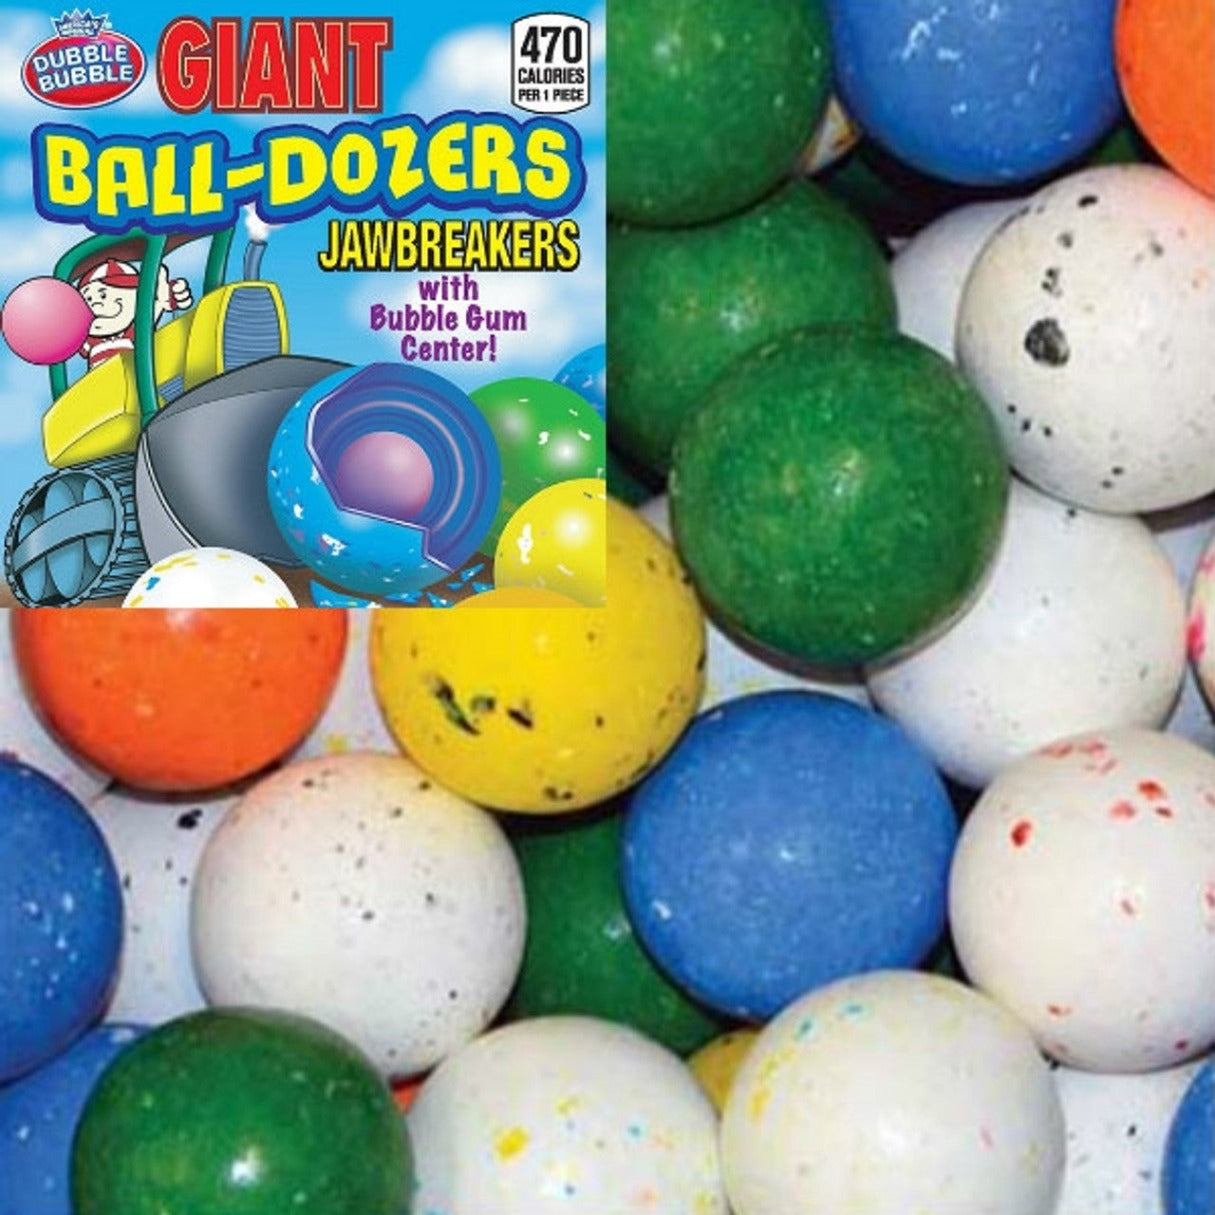 Double Bubble Giant Ball-Dozers Jawbreakers Box - 24.4lb